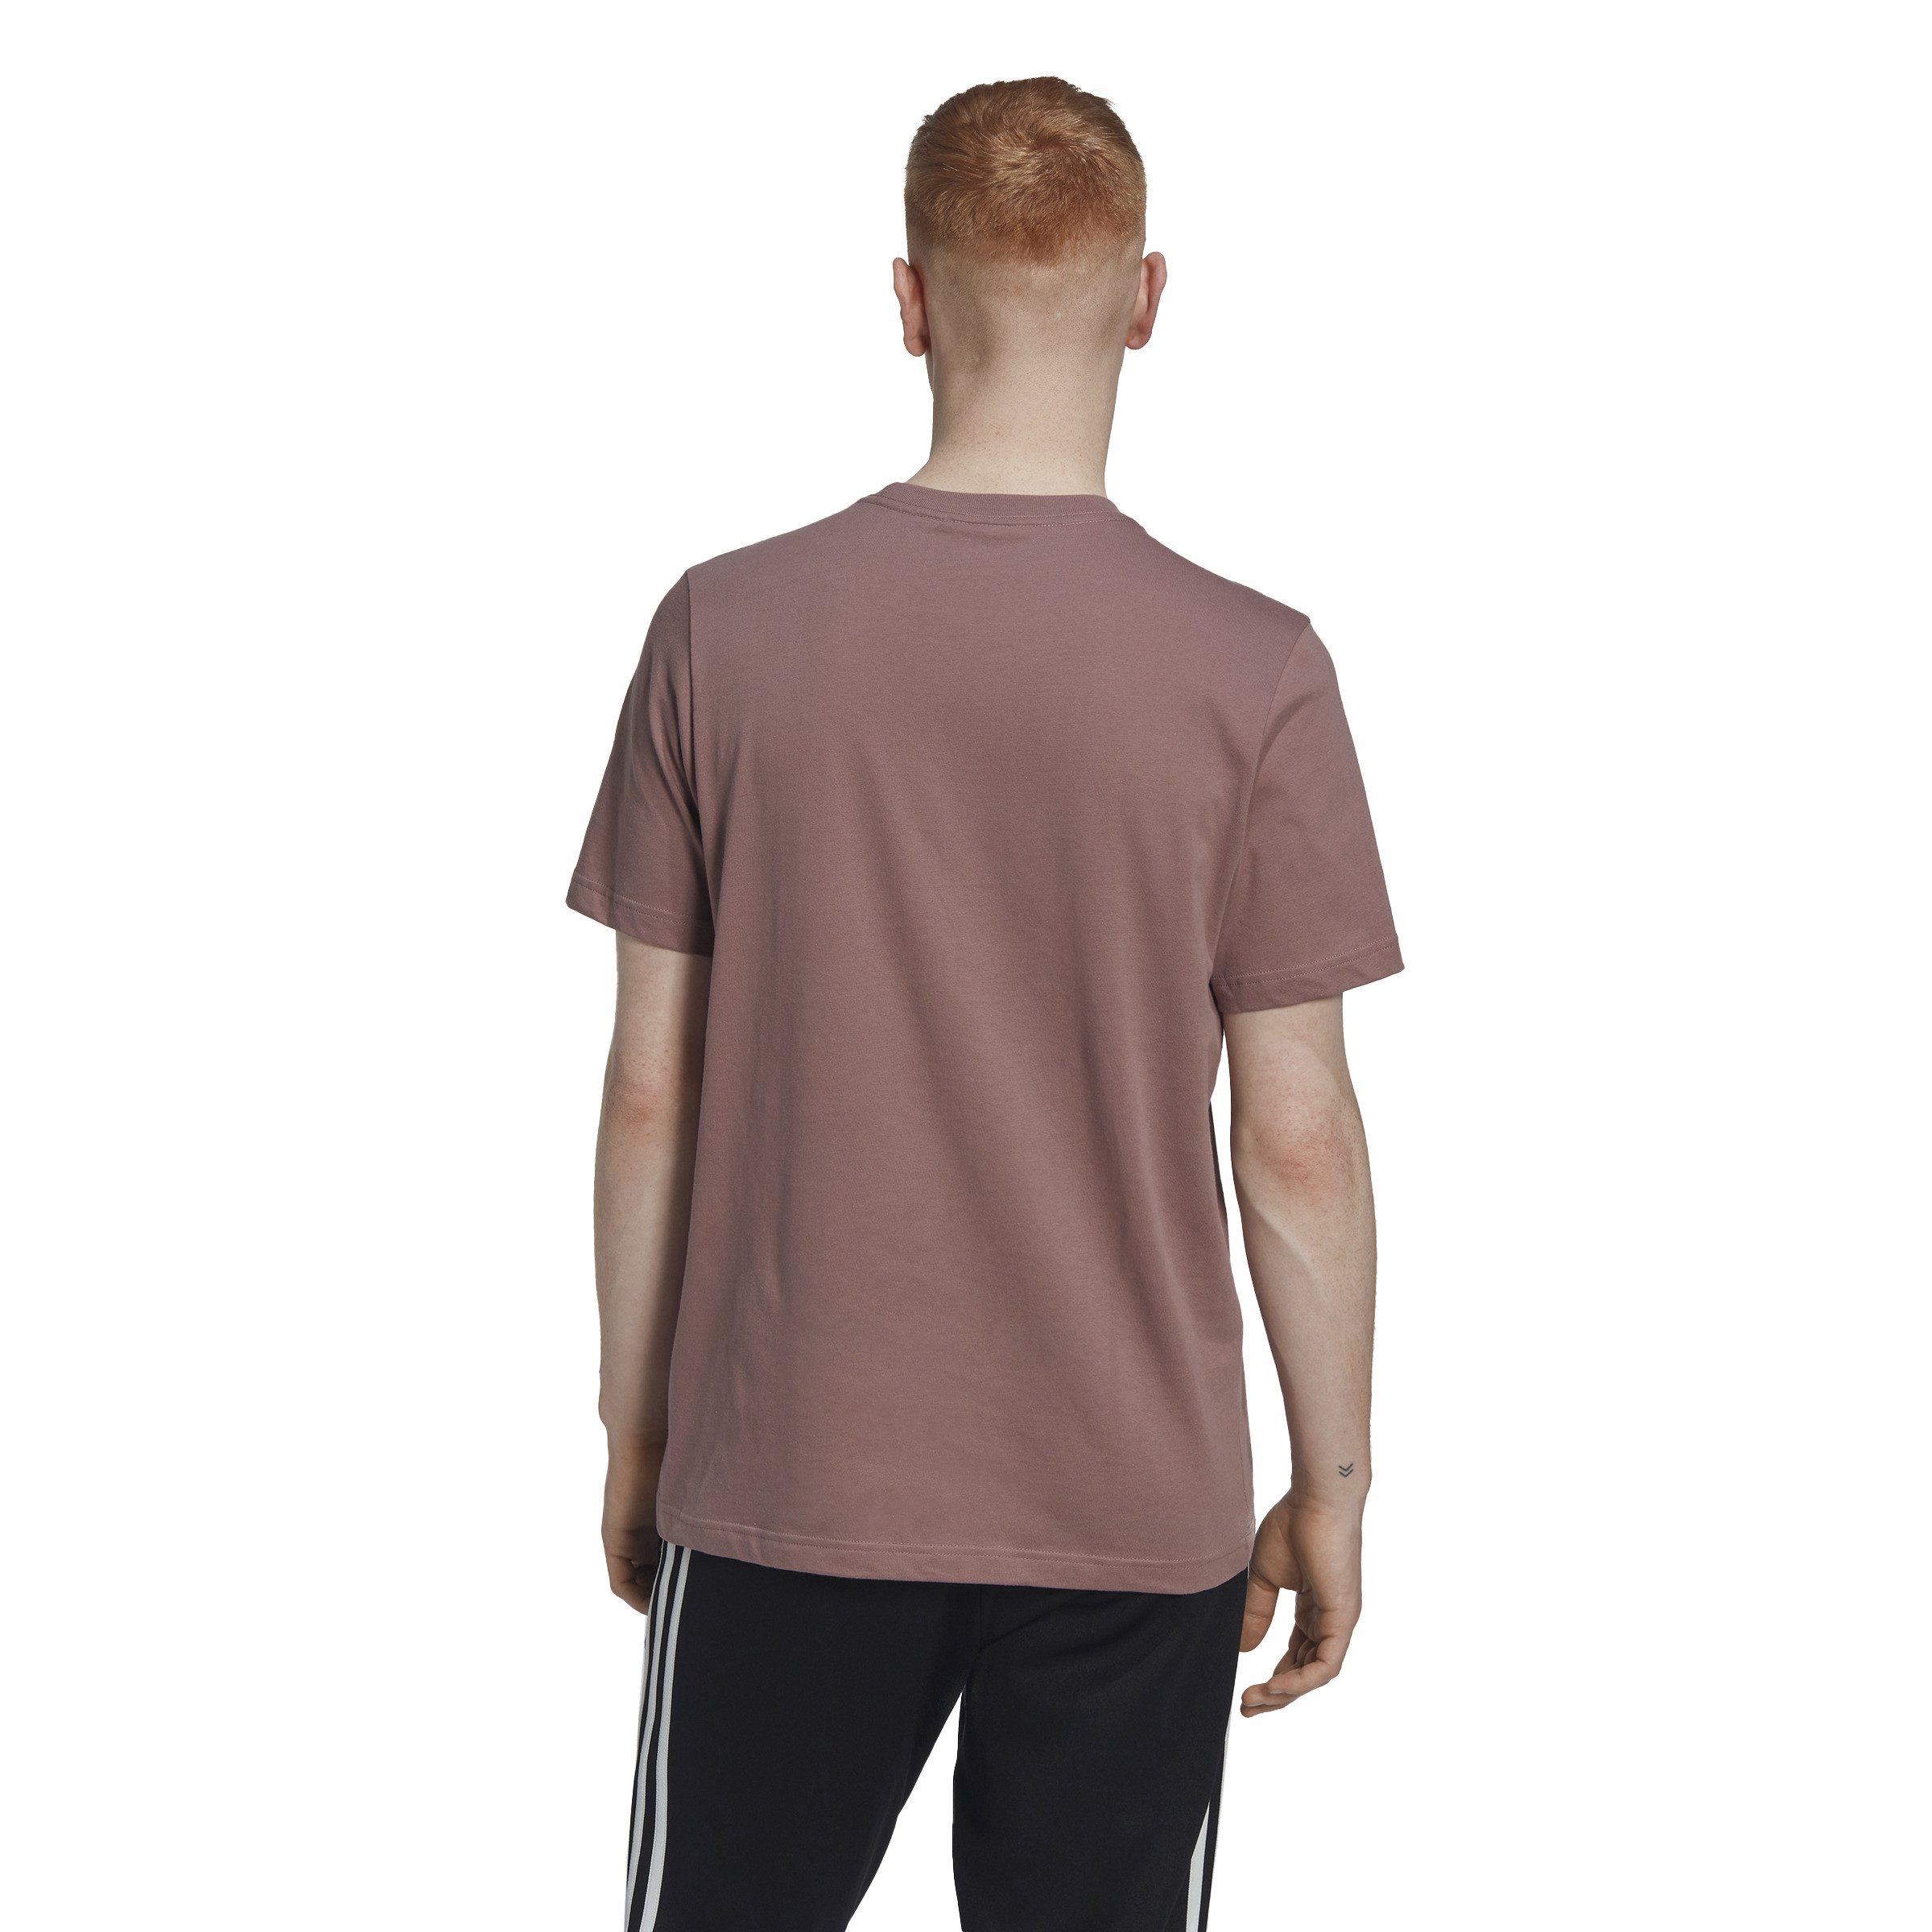 Adidas - T-shirt girocollo con logo, Rosa antico, large image number 6